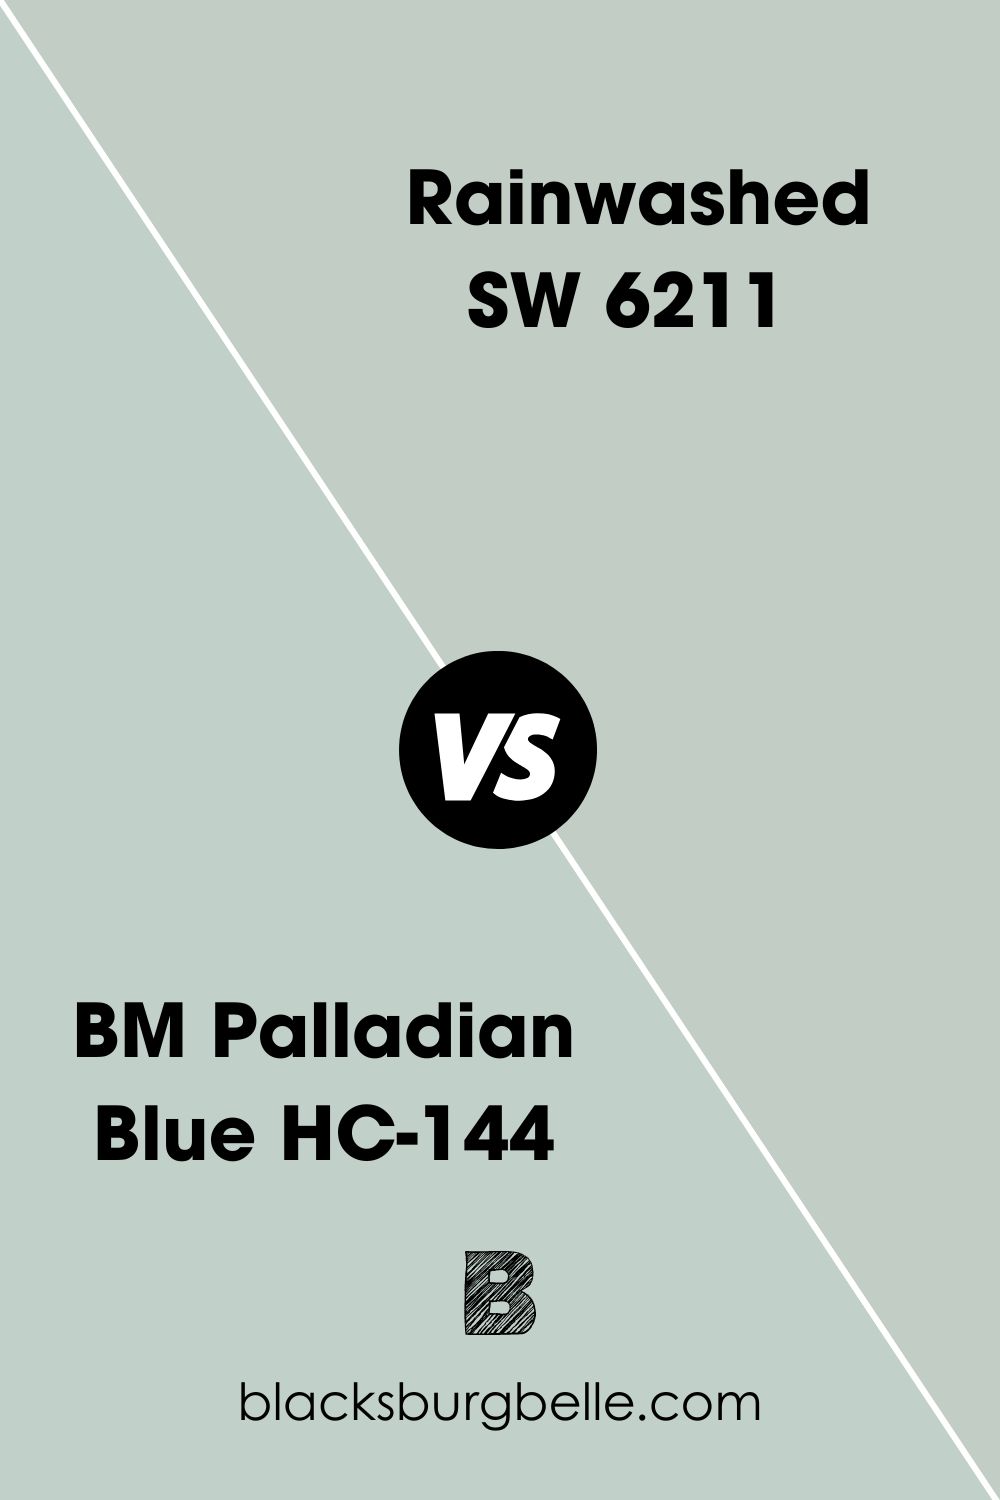 BM Palladian Blue vs SW Rainwashed